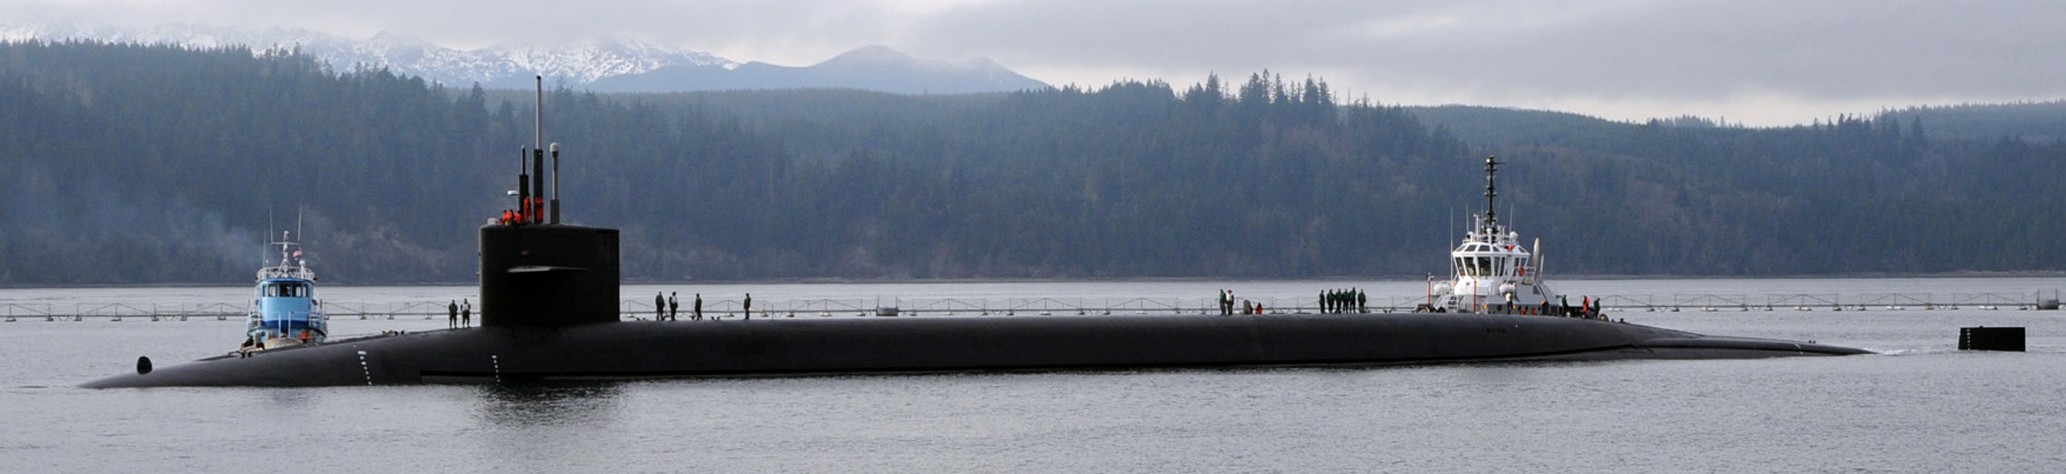 ssbn-731 uss alabama ohio class ballistic missile submarine 2011 20 naval base kitsap bangor bremerton